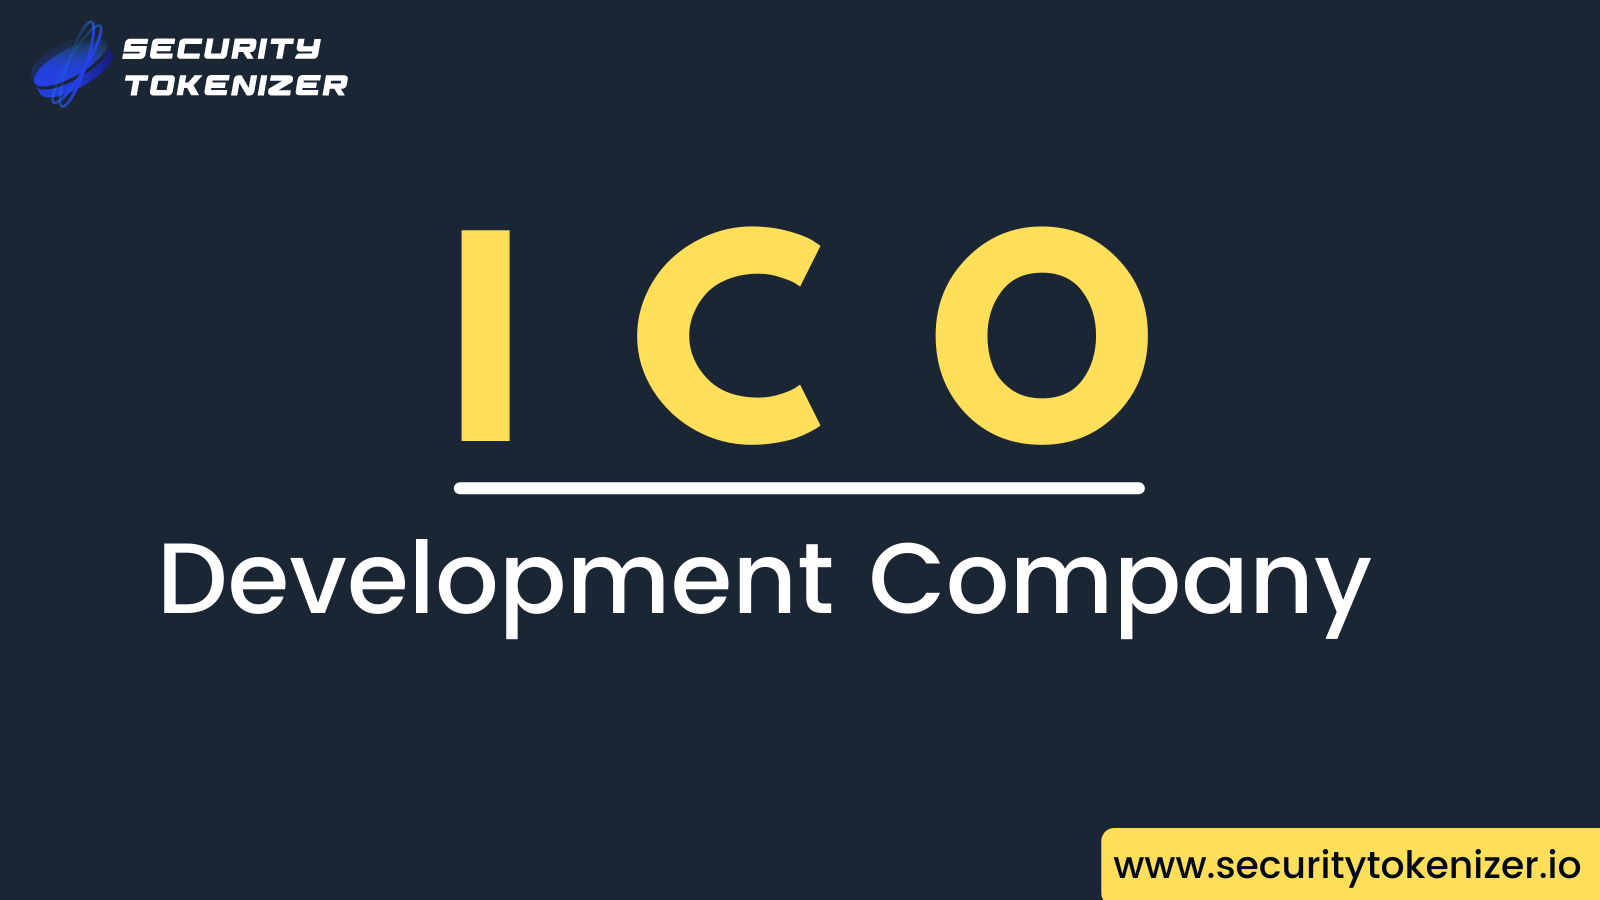 ICO Development Company - To Create your Fundraising Platform like ICO